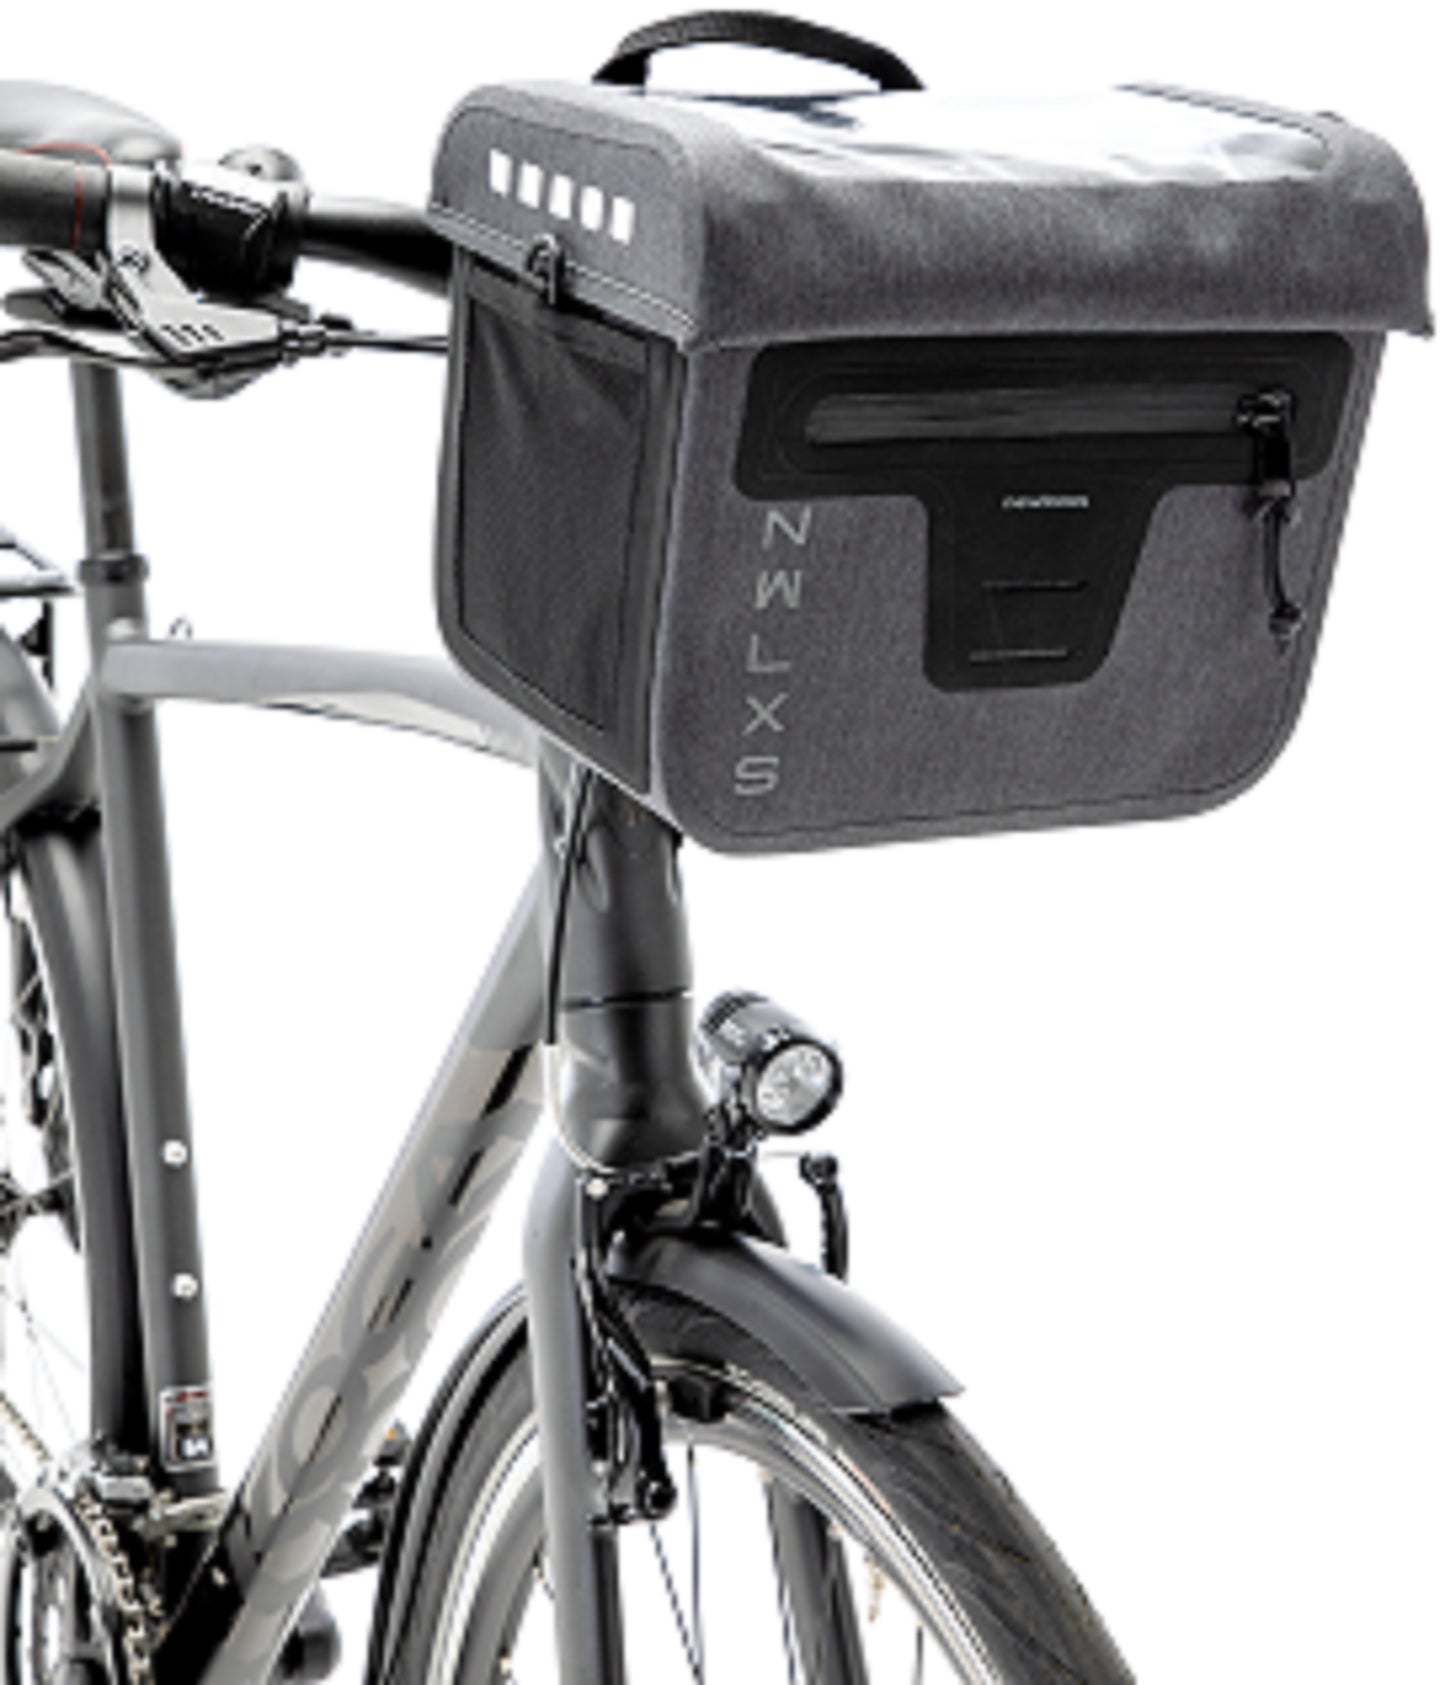 Nuova borsa per manubrio Varo Looxs - Nylon impermeabile - Grey - Bicycle